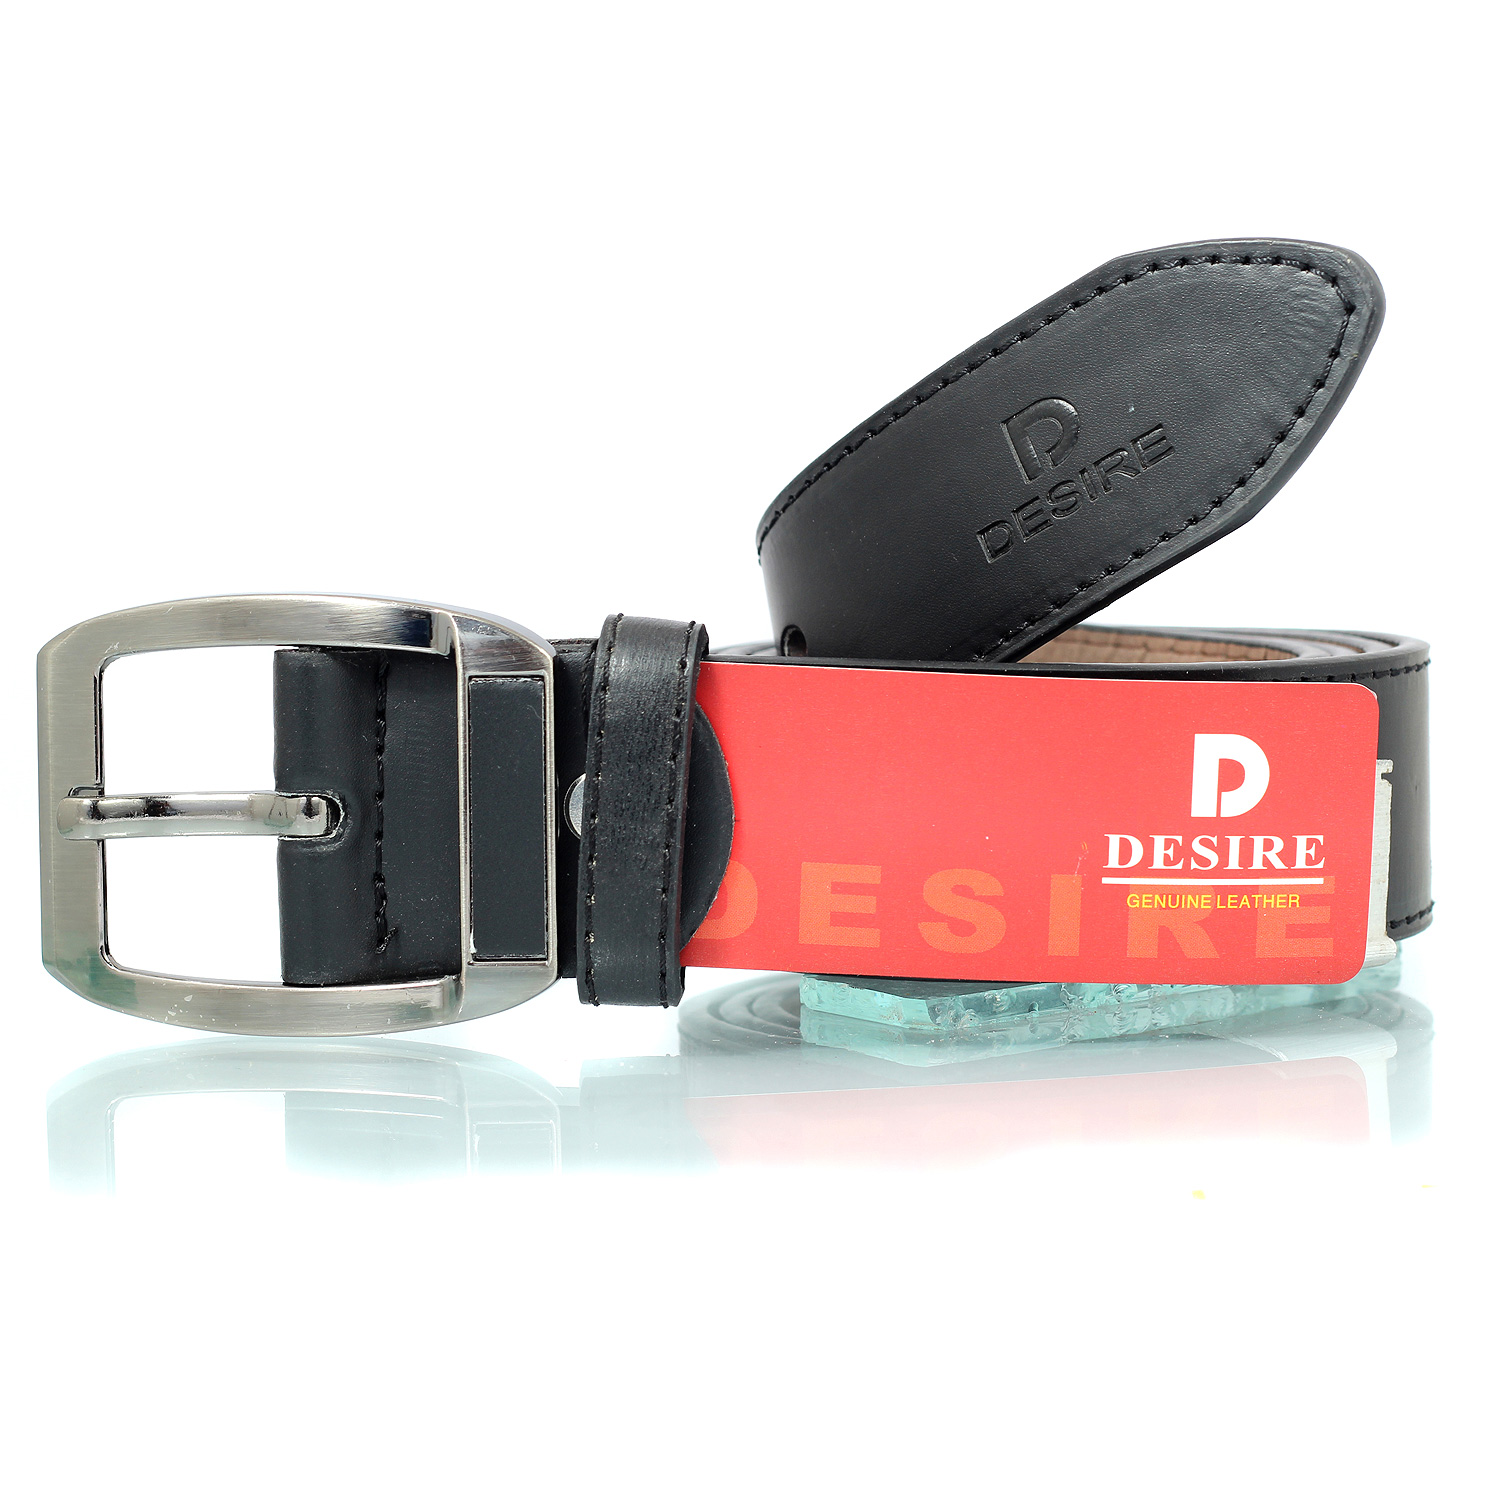 Desire pin buckle genuine leather belt